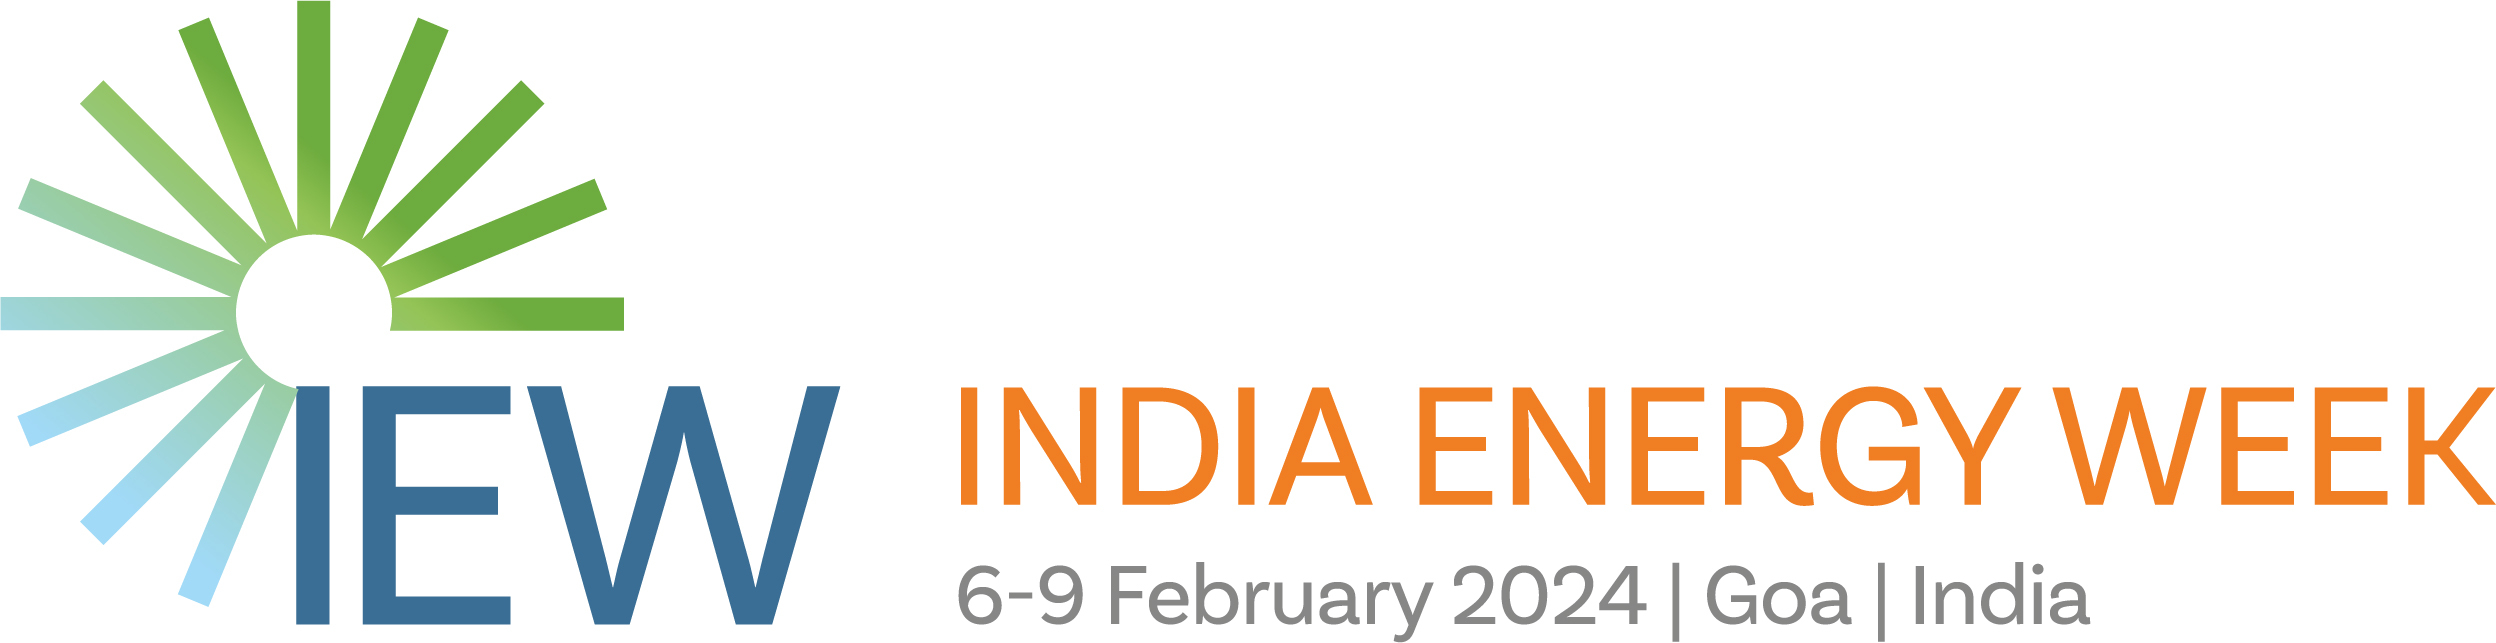 India Energy Events